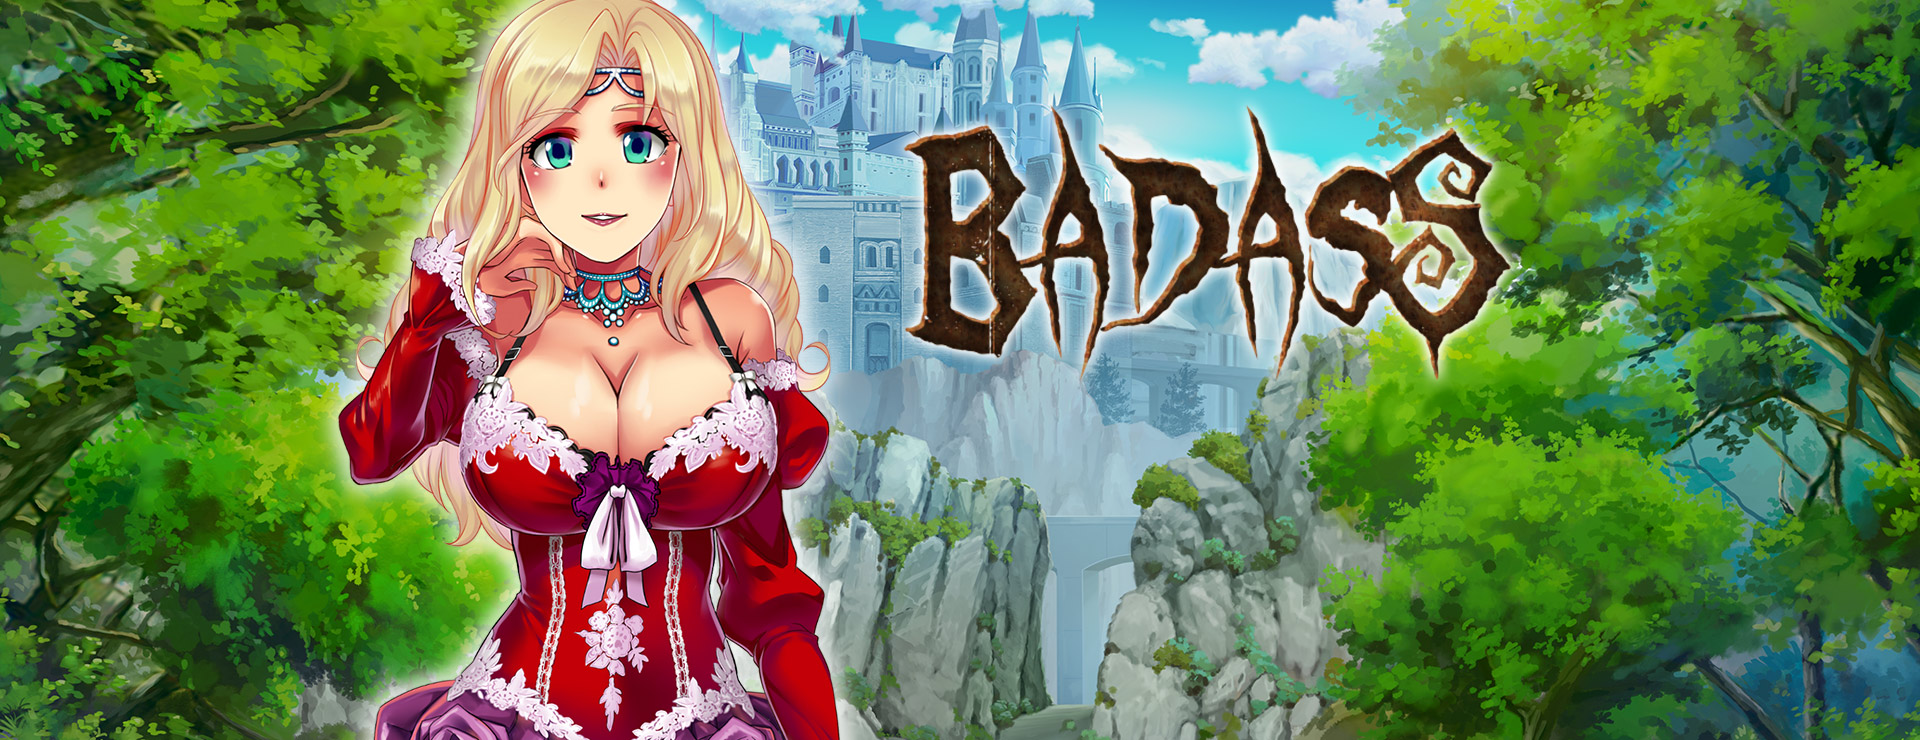 BADASS - RPG ゲーム